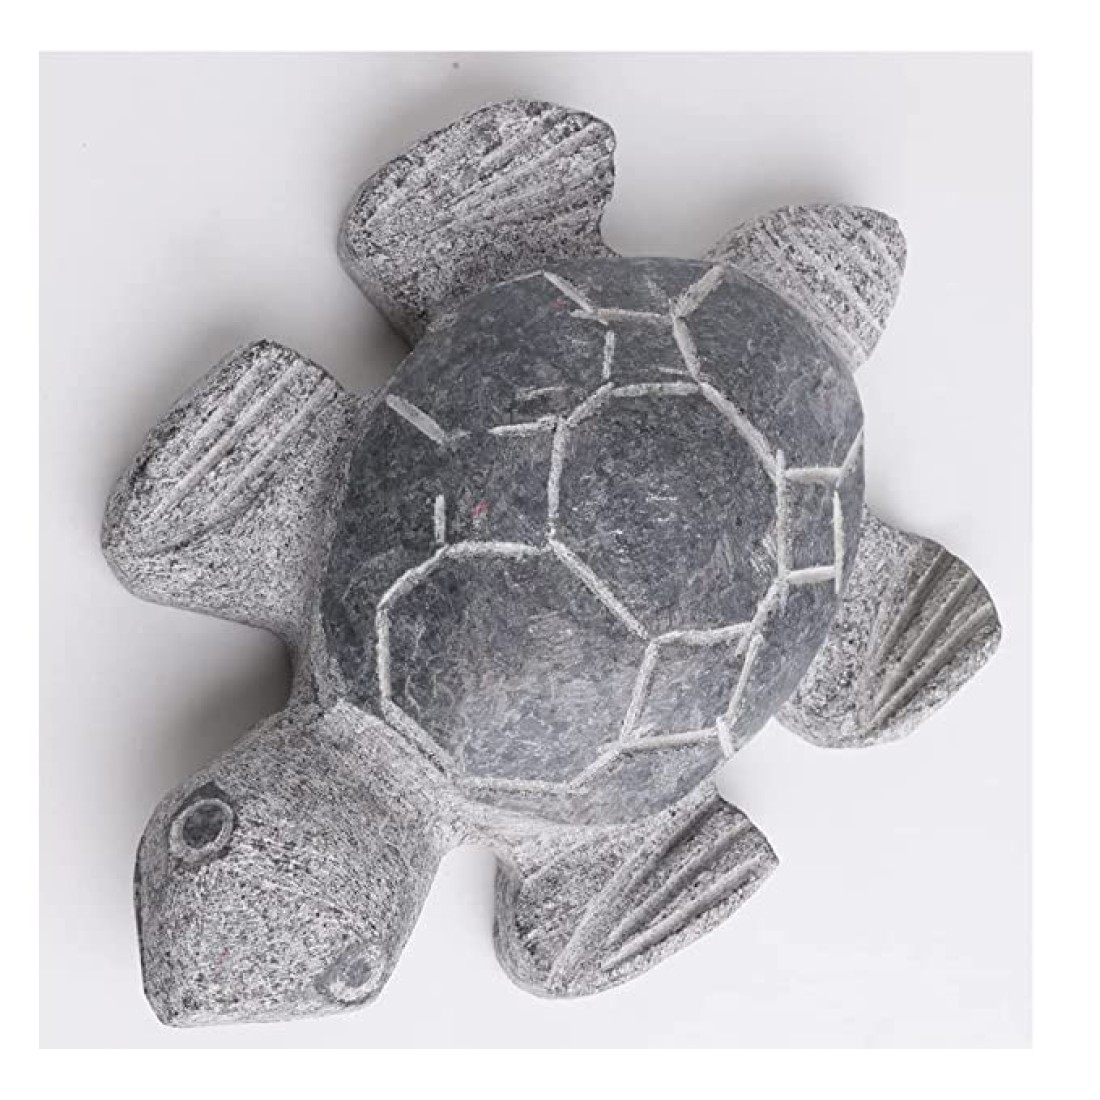 Tillage-Natural Stone Carved Tortoise for Vastu/Feng Shui/Pooja and for Home Decor (Size 20cmx15cm) 2